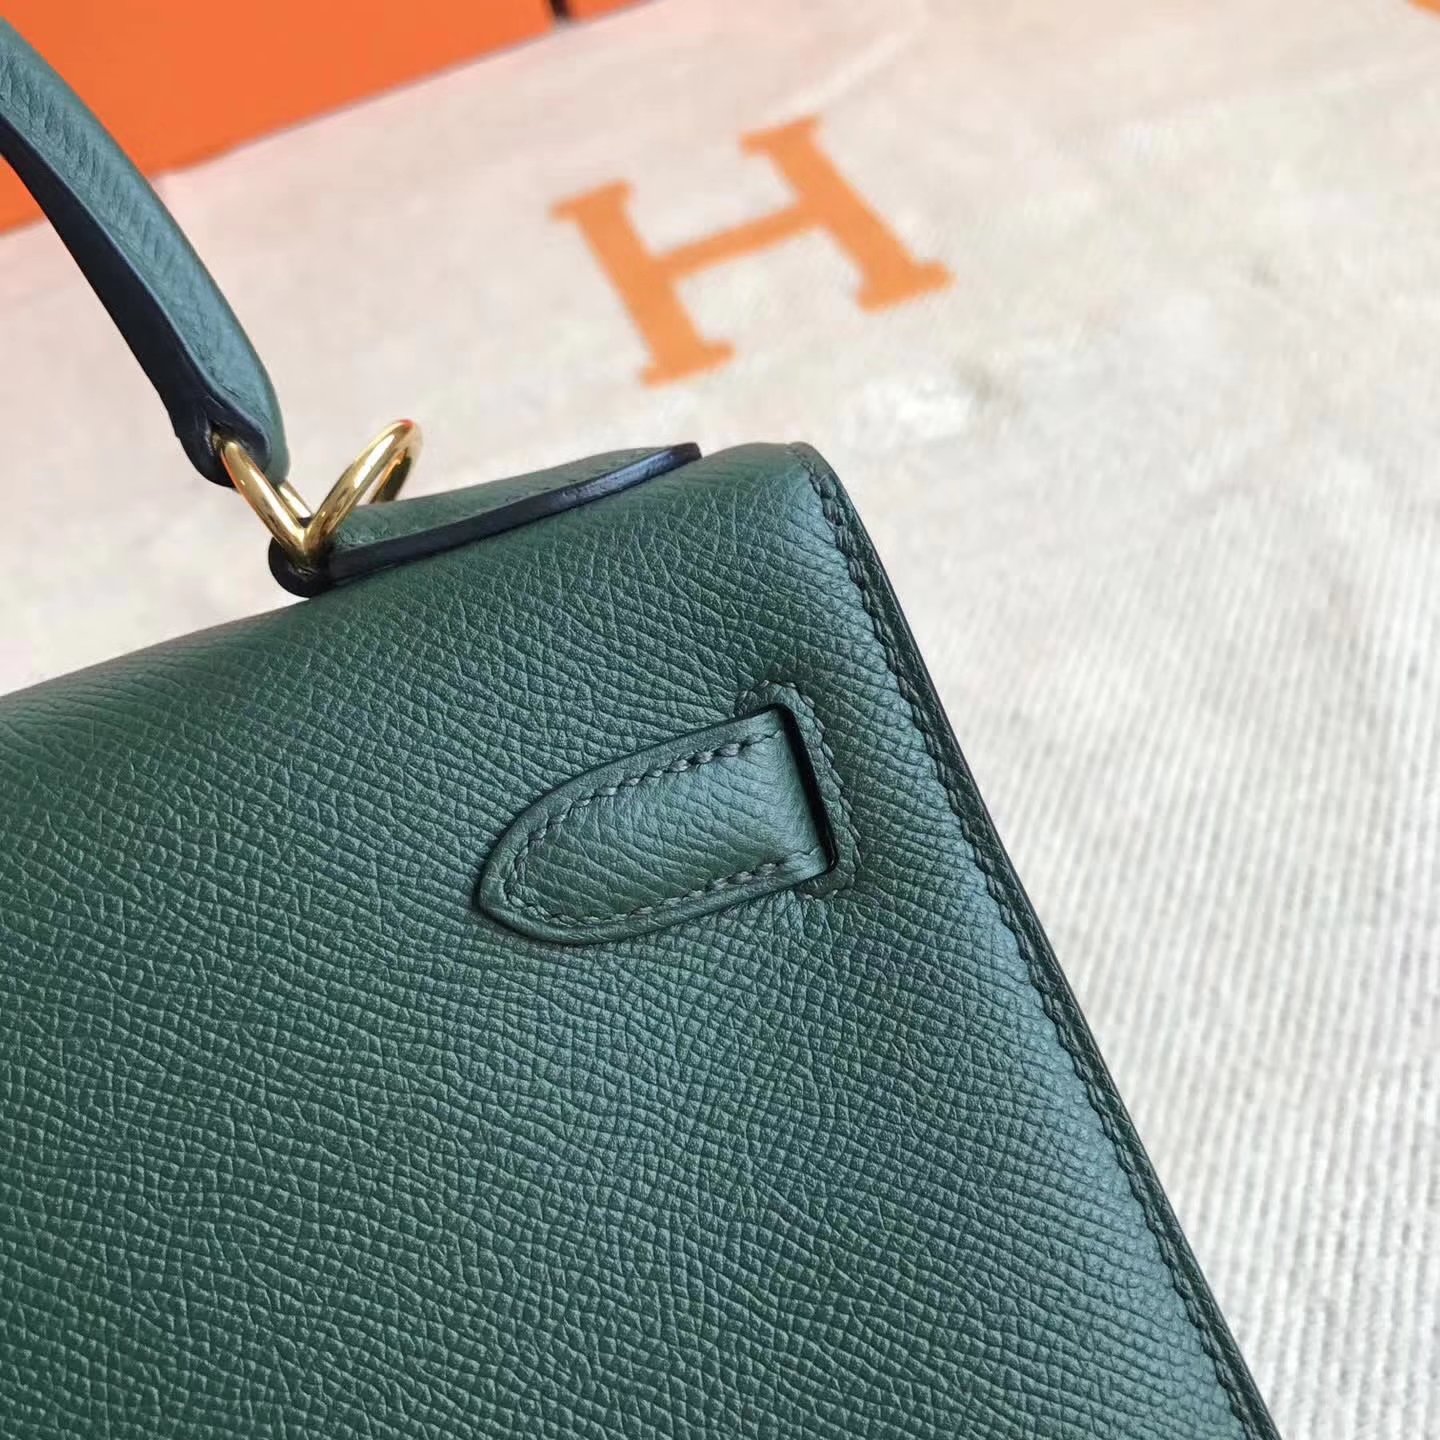 Discount Hermes 2Q English Green Epsom Leather Kelly28cm Bag Women&#8217;s Handbag